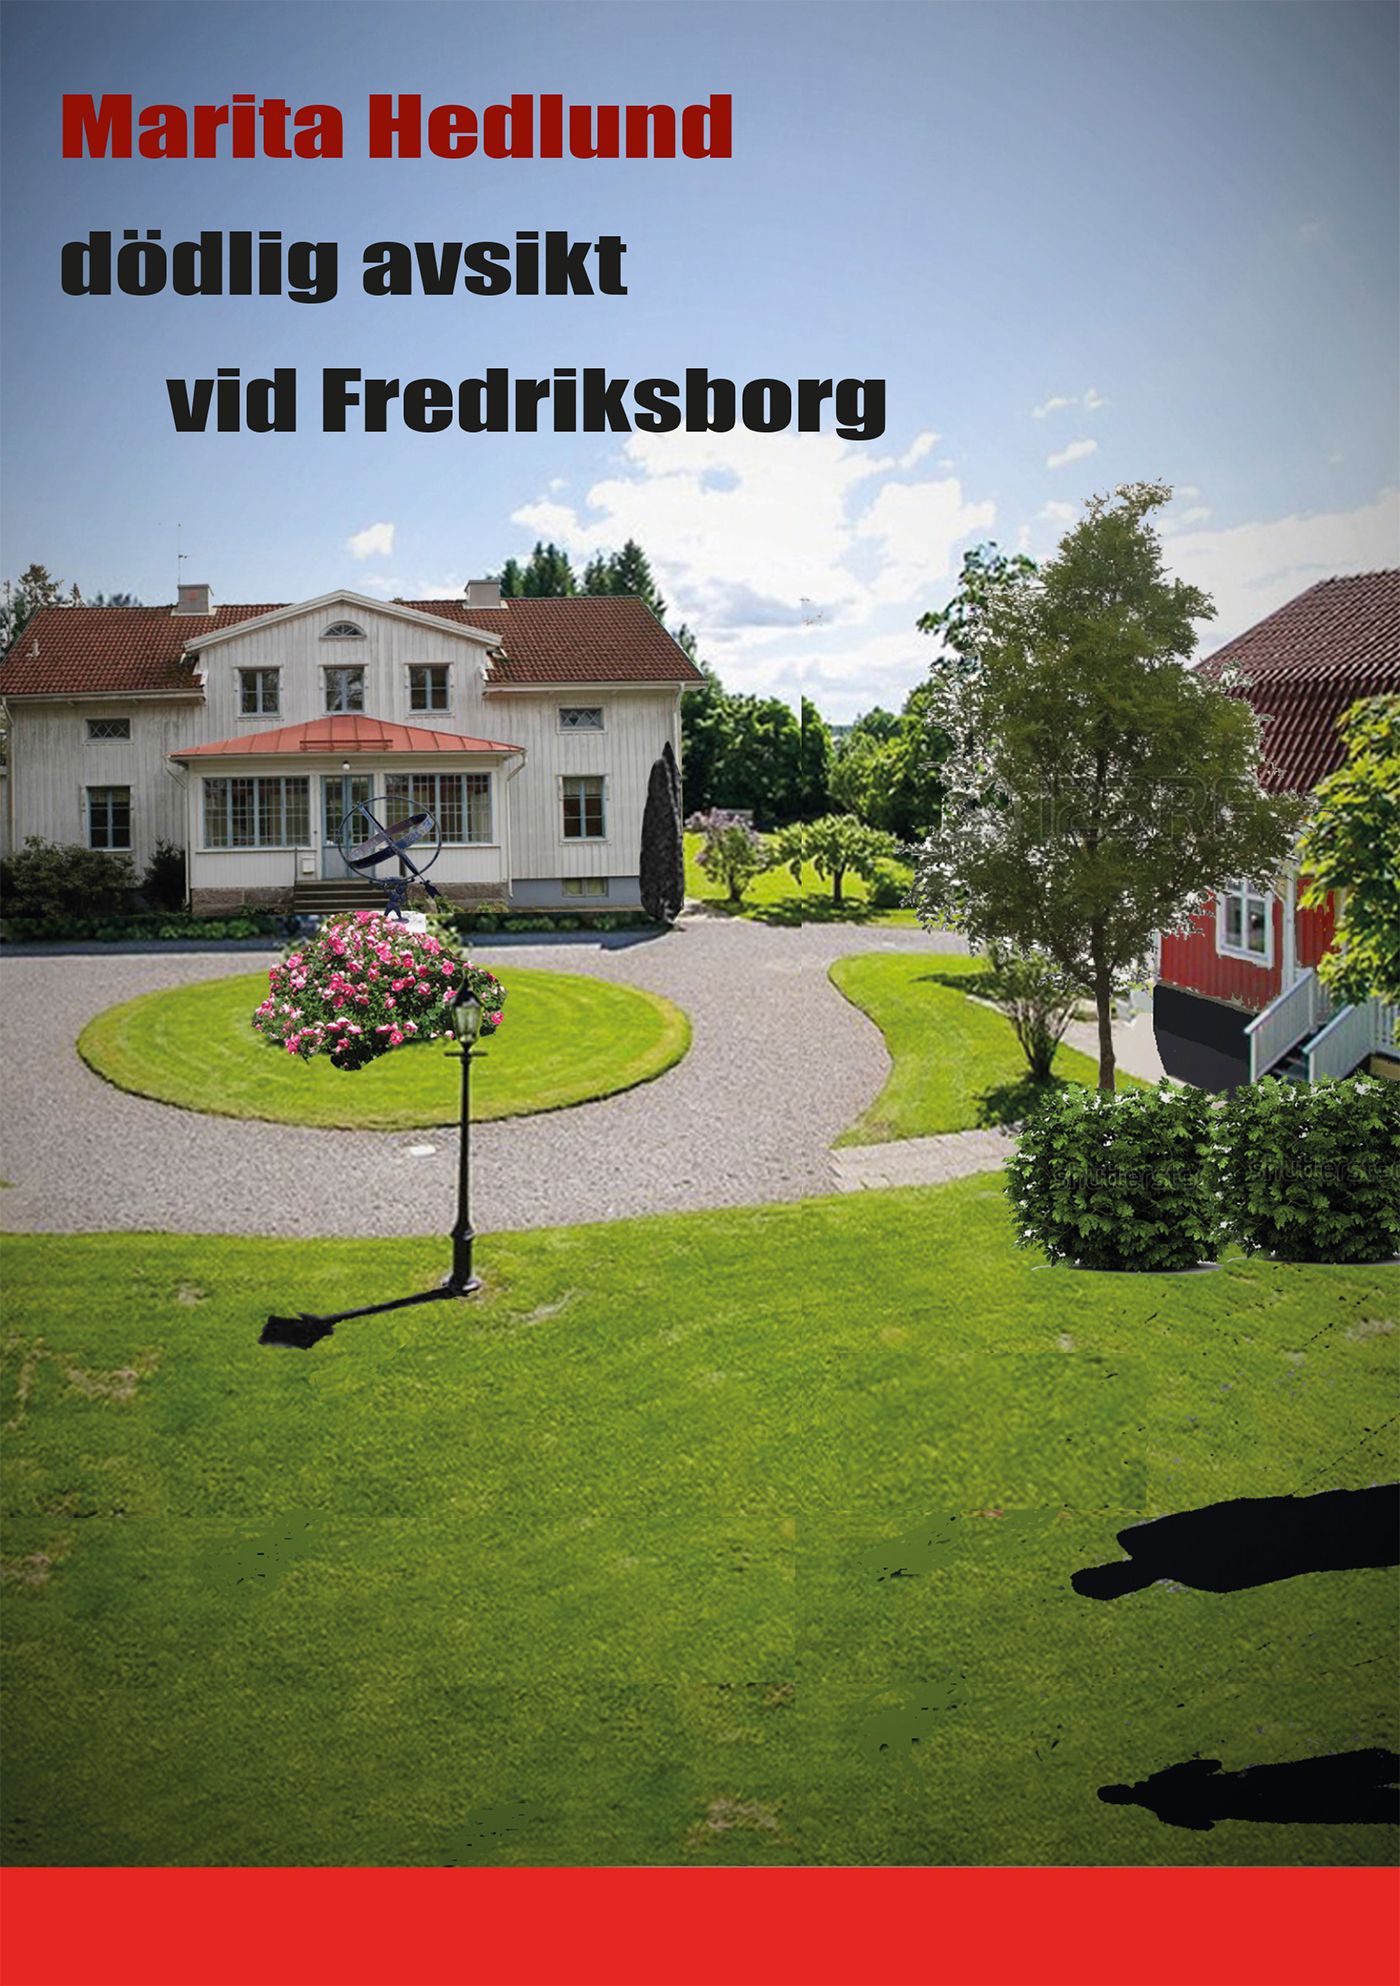 dödlig avsikt vid Fredriksborg, e-bog af Marita Hedlund